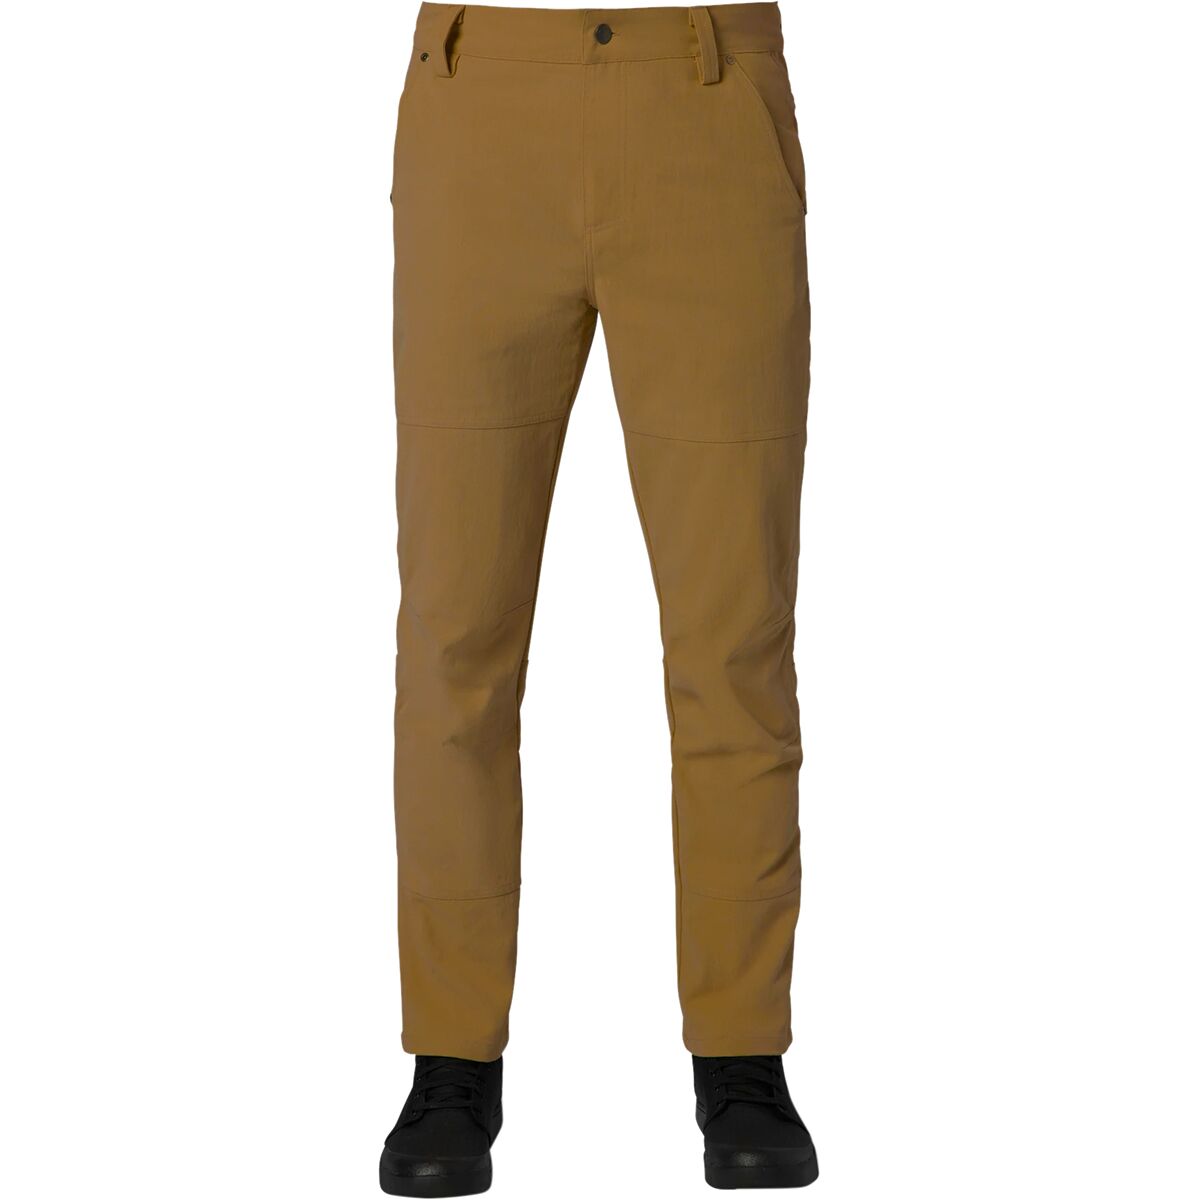 Trailworks Pant - Men's Workwear Pants